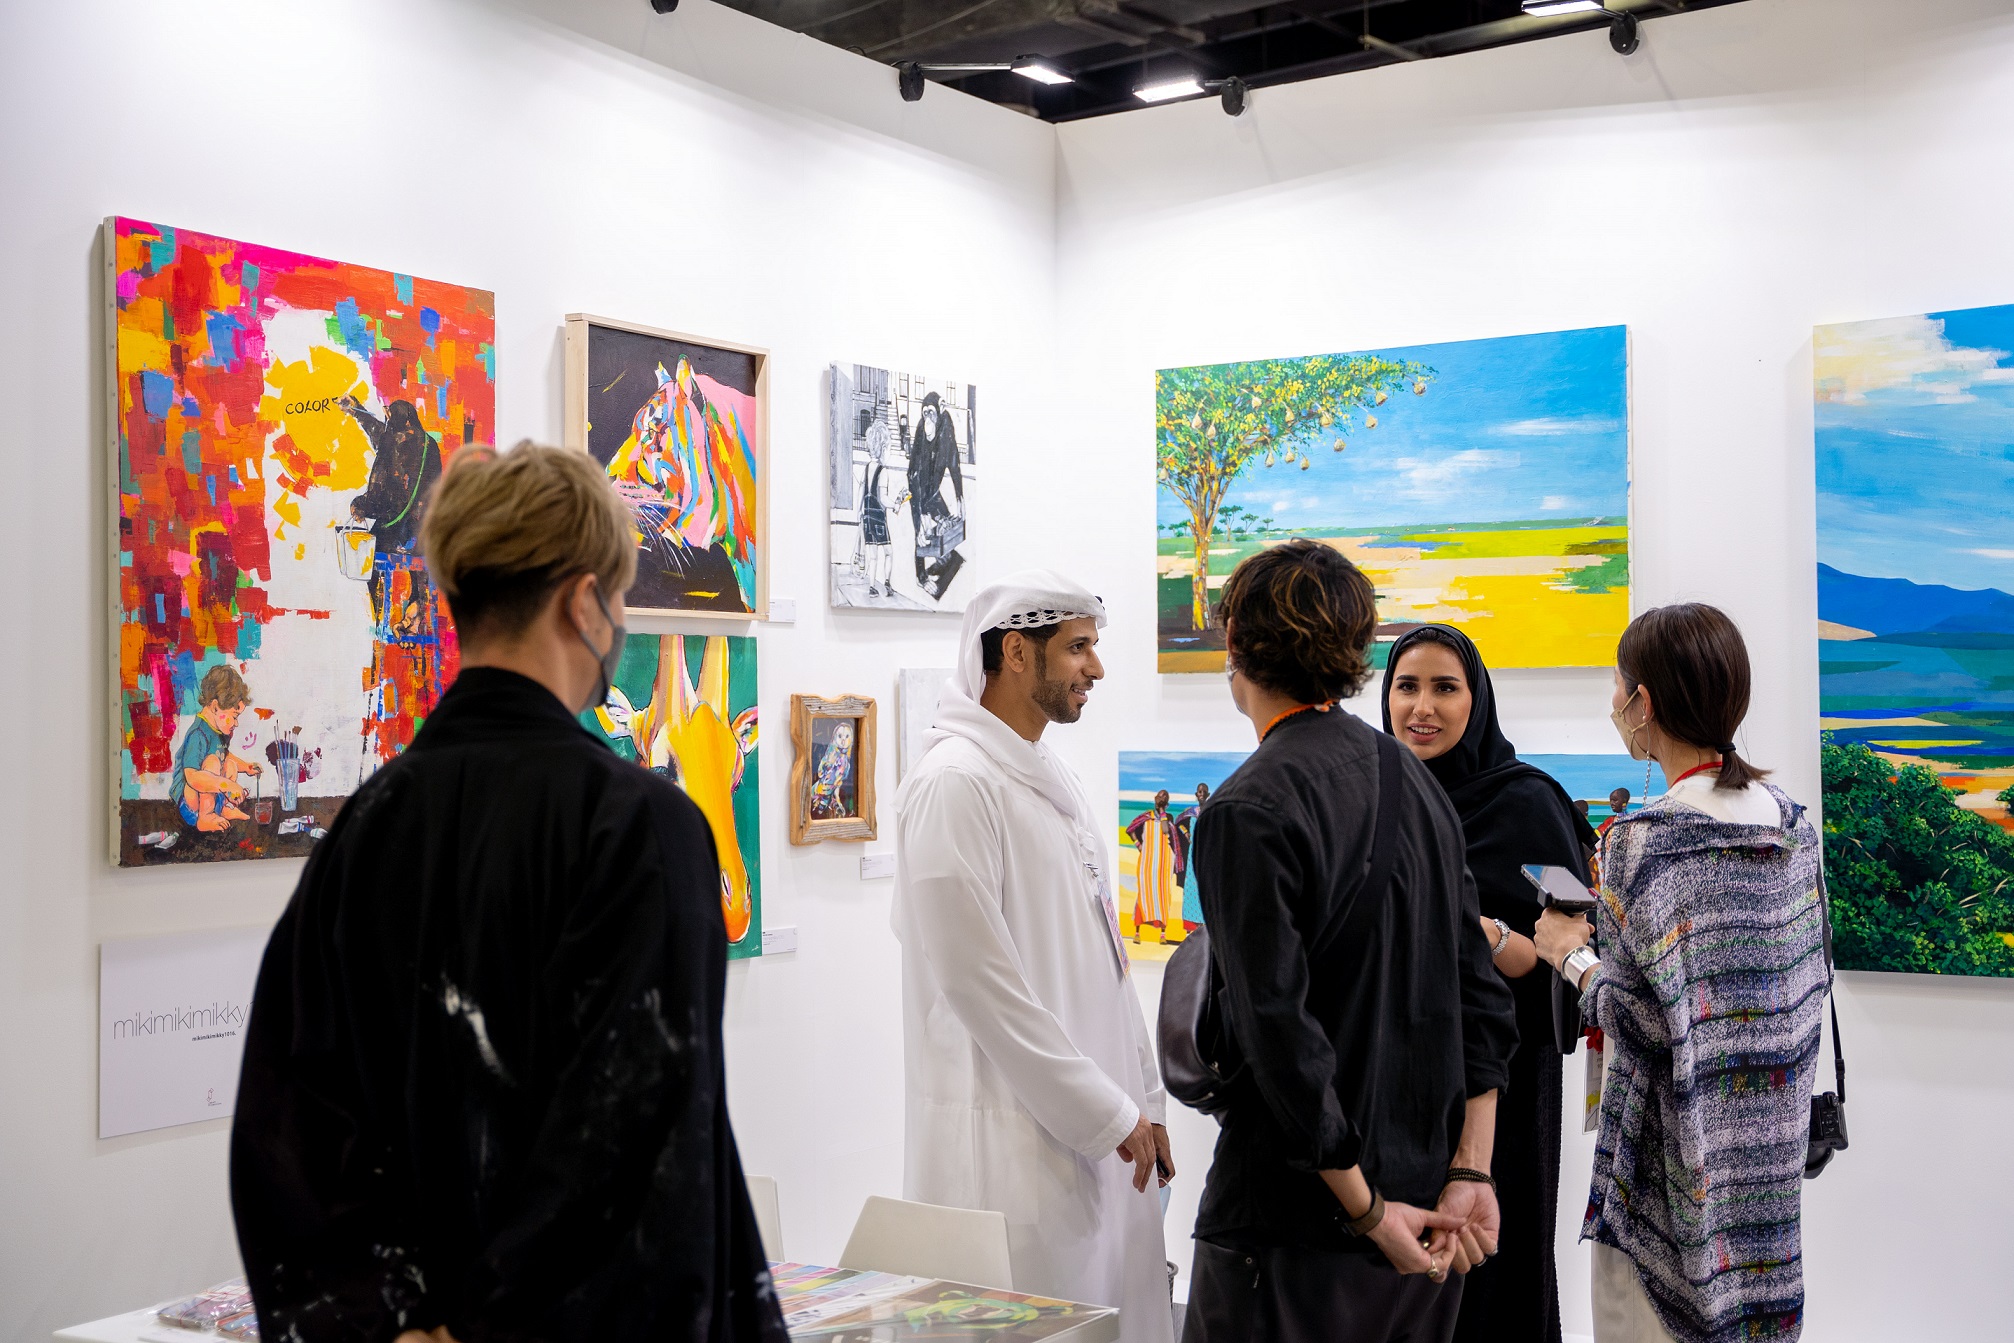 HER EXCELLENCY HALA BADRI OPENS THE EIGHTH EDITION OF WORLD ART DUBAI